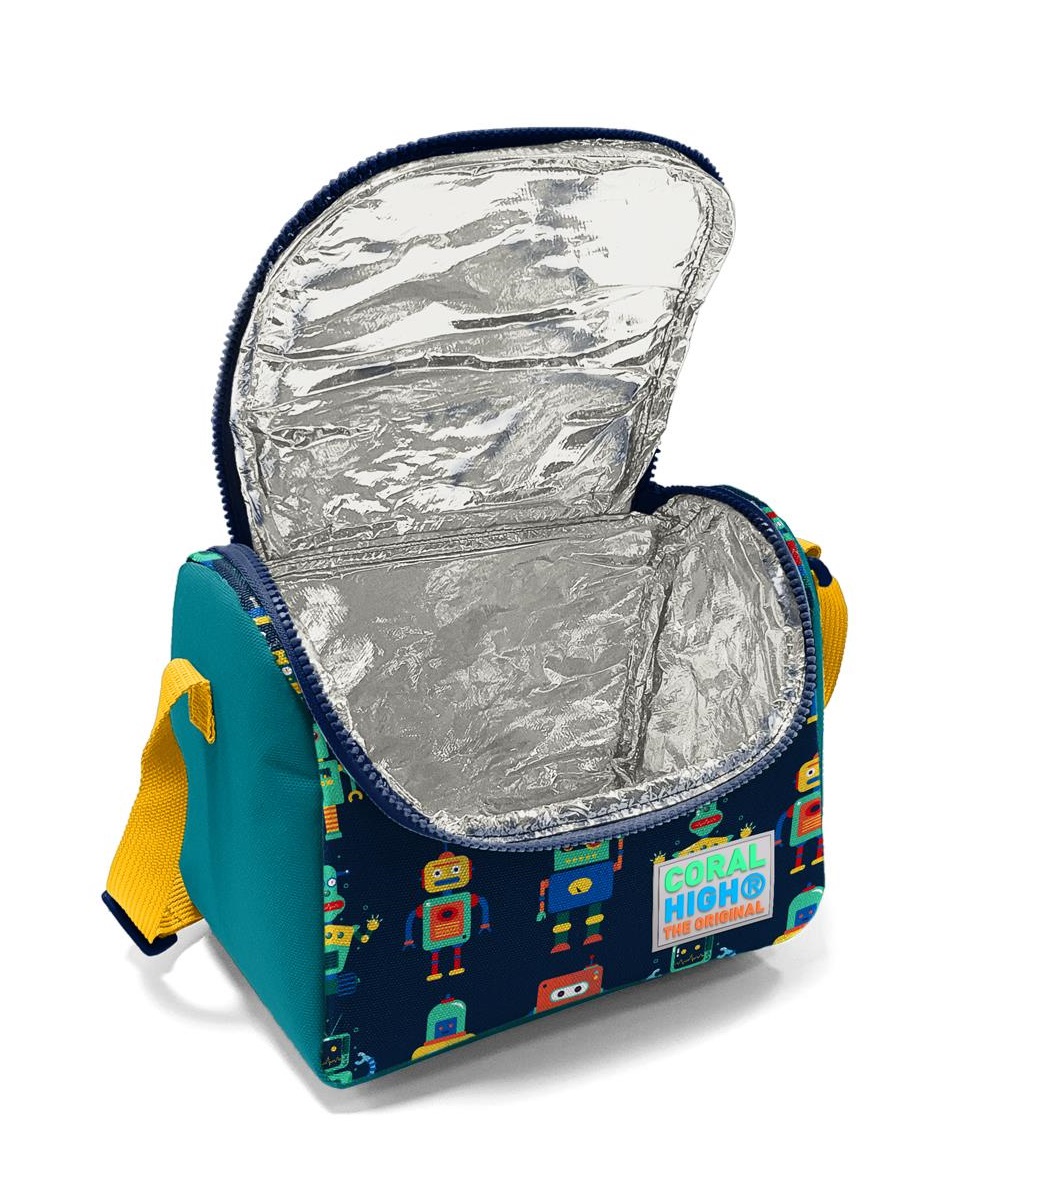 Coral High Kids Thermal Lunch Bag - Navy Blue Indigo Robot